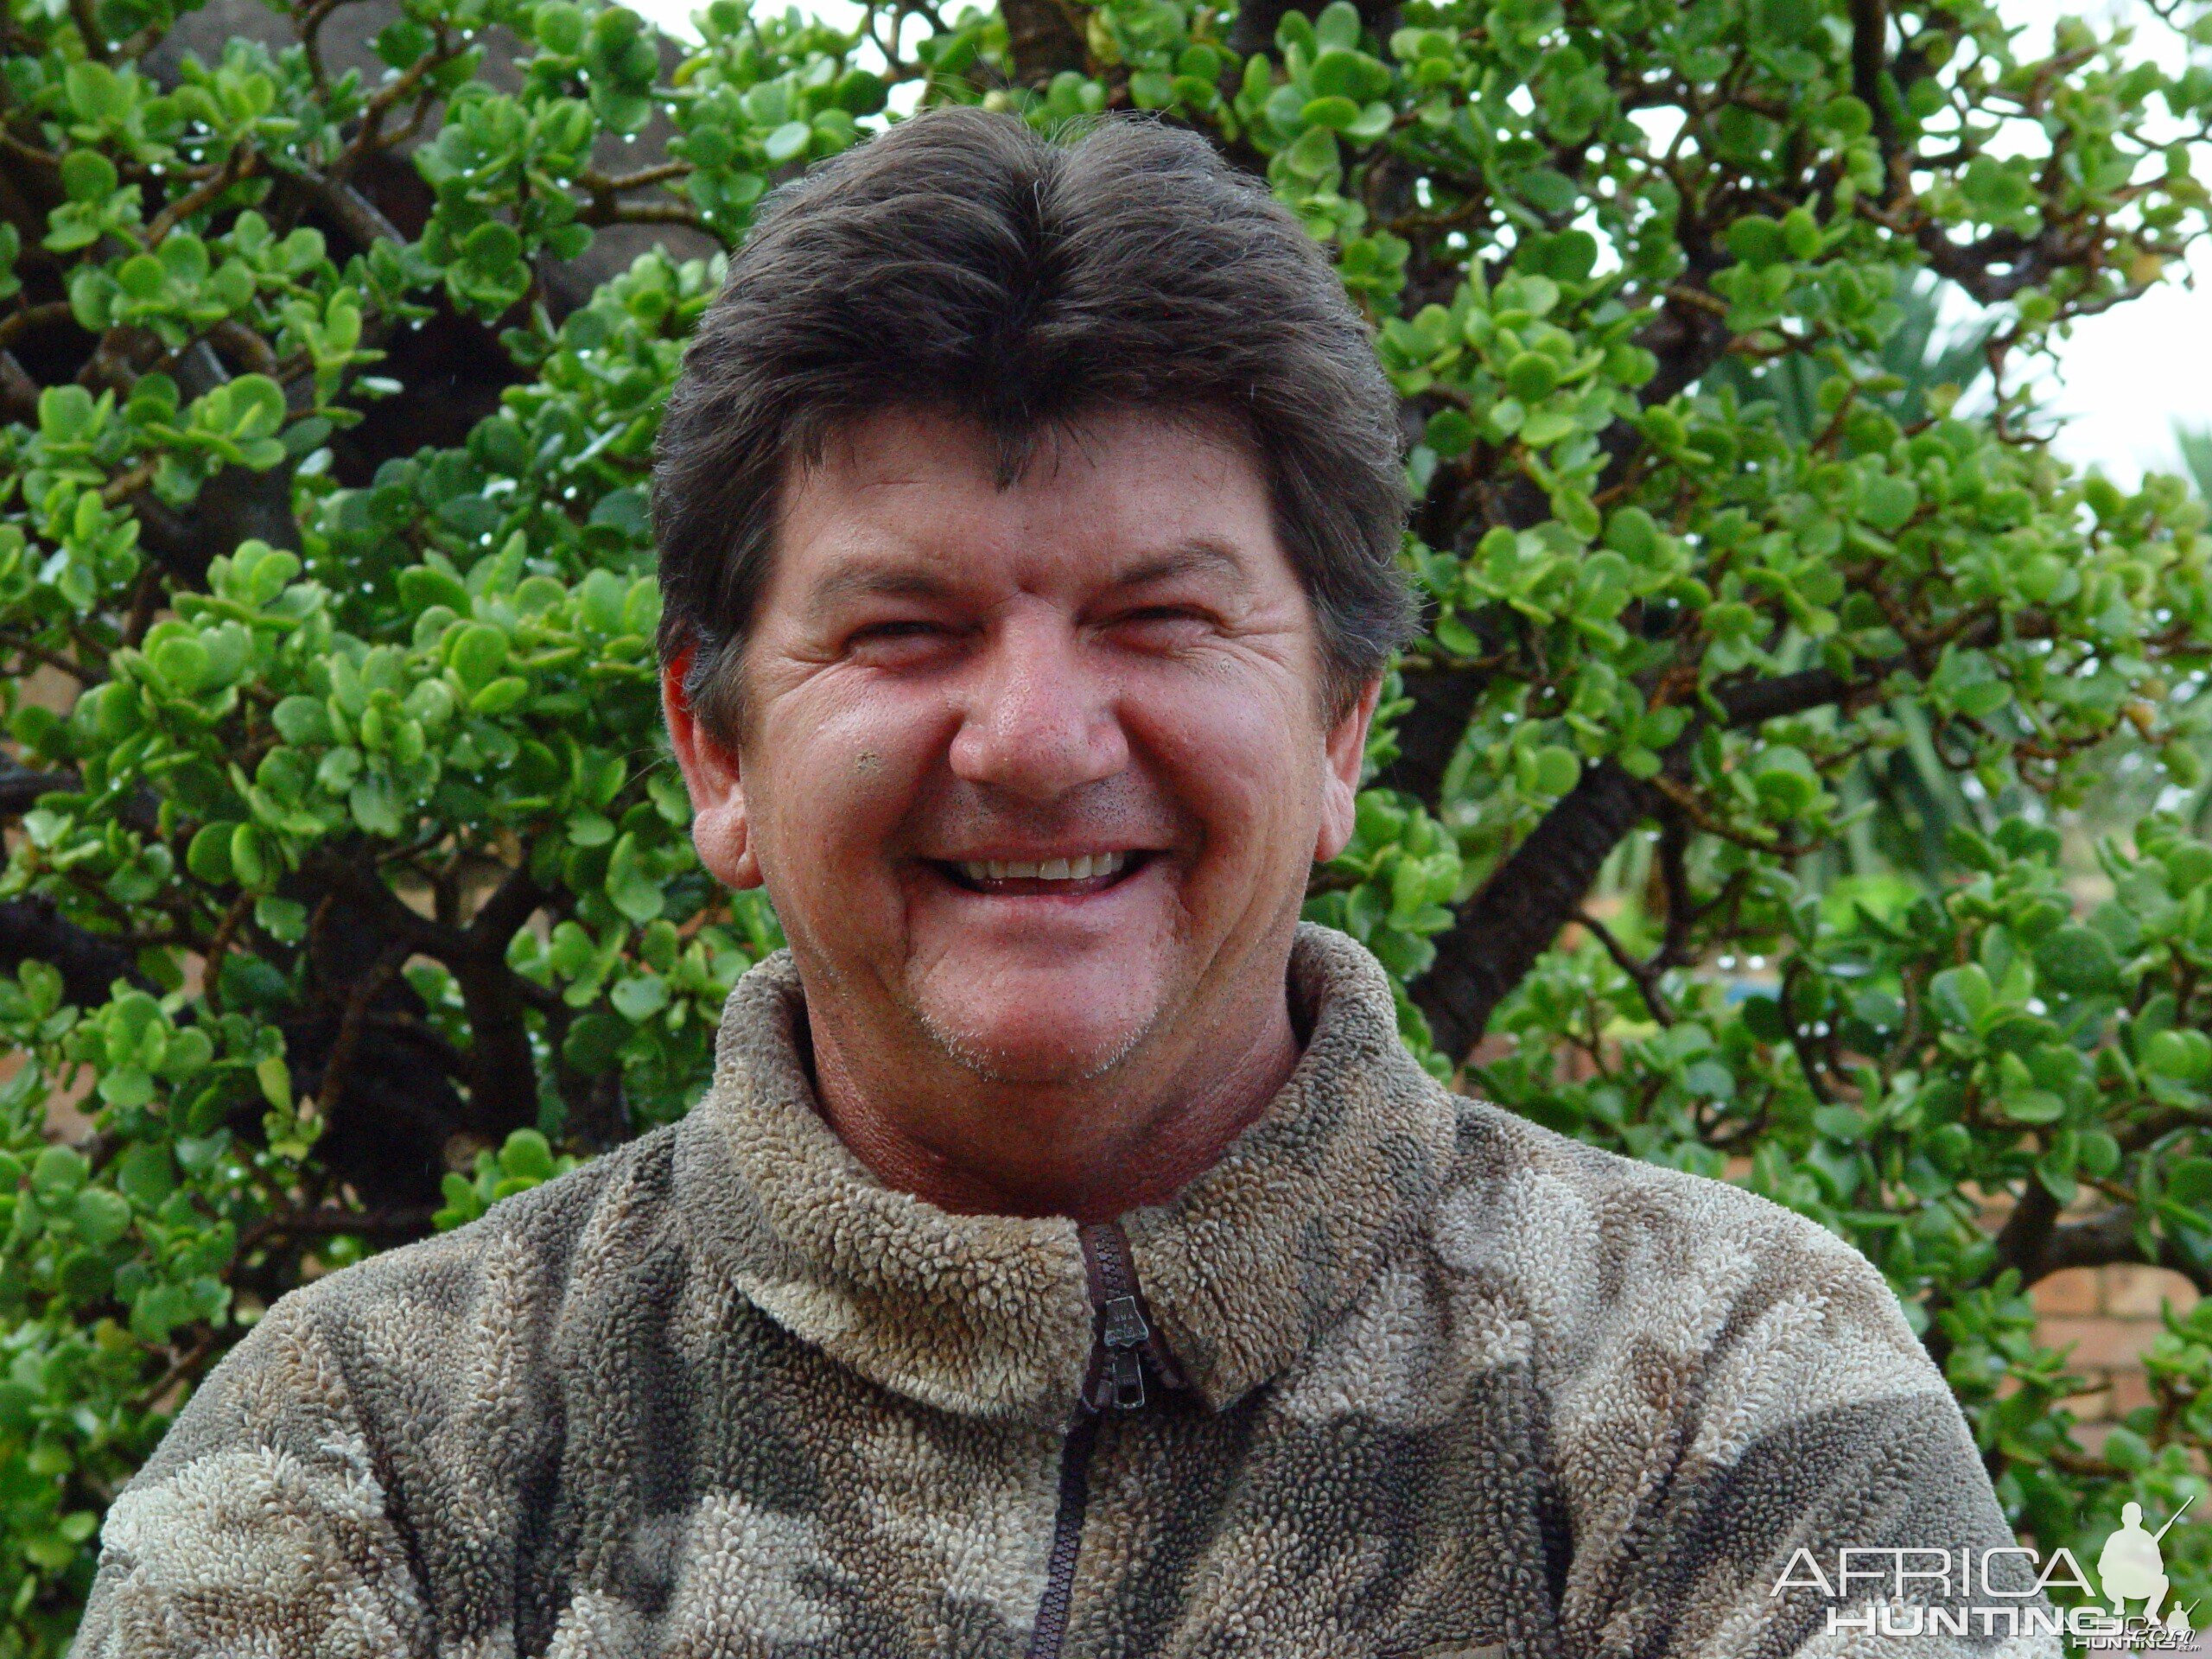 PH Johnny Vivier with Wintershoek Johnny Vivier Safaris in South Africa